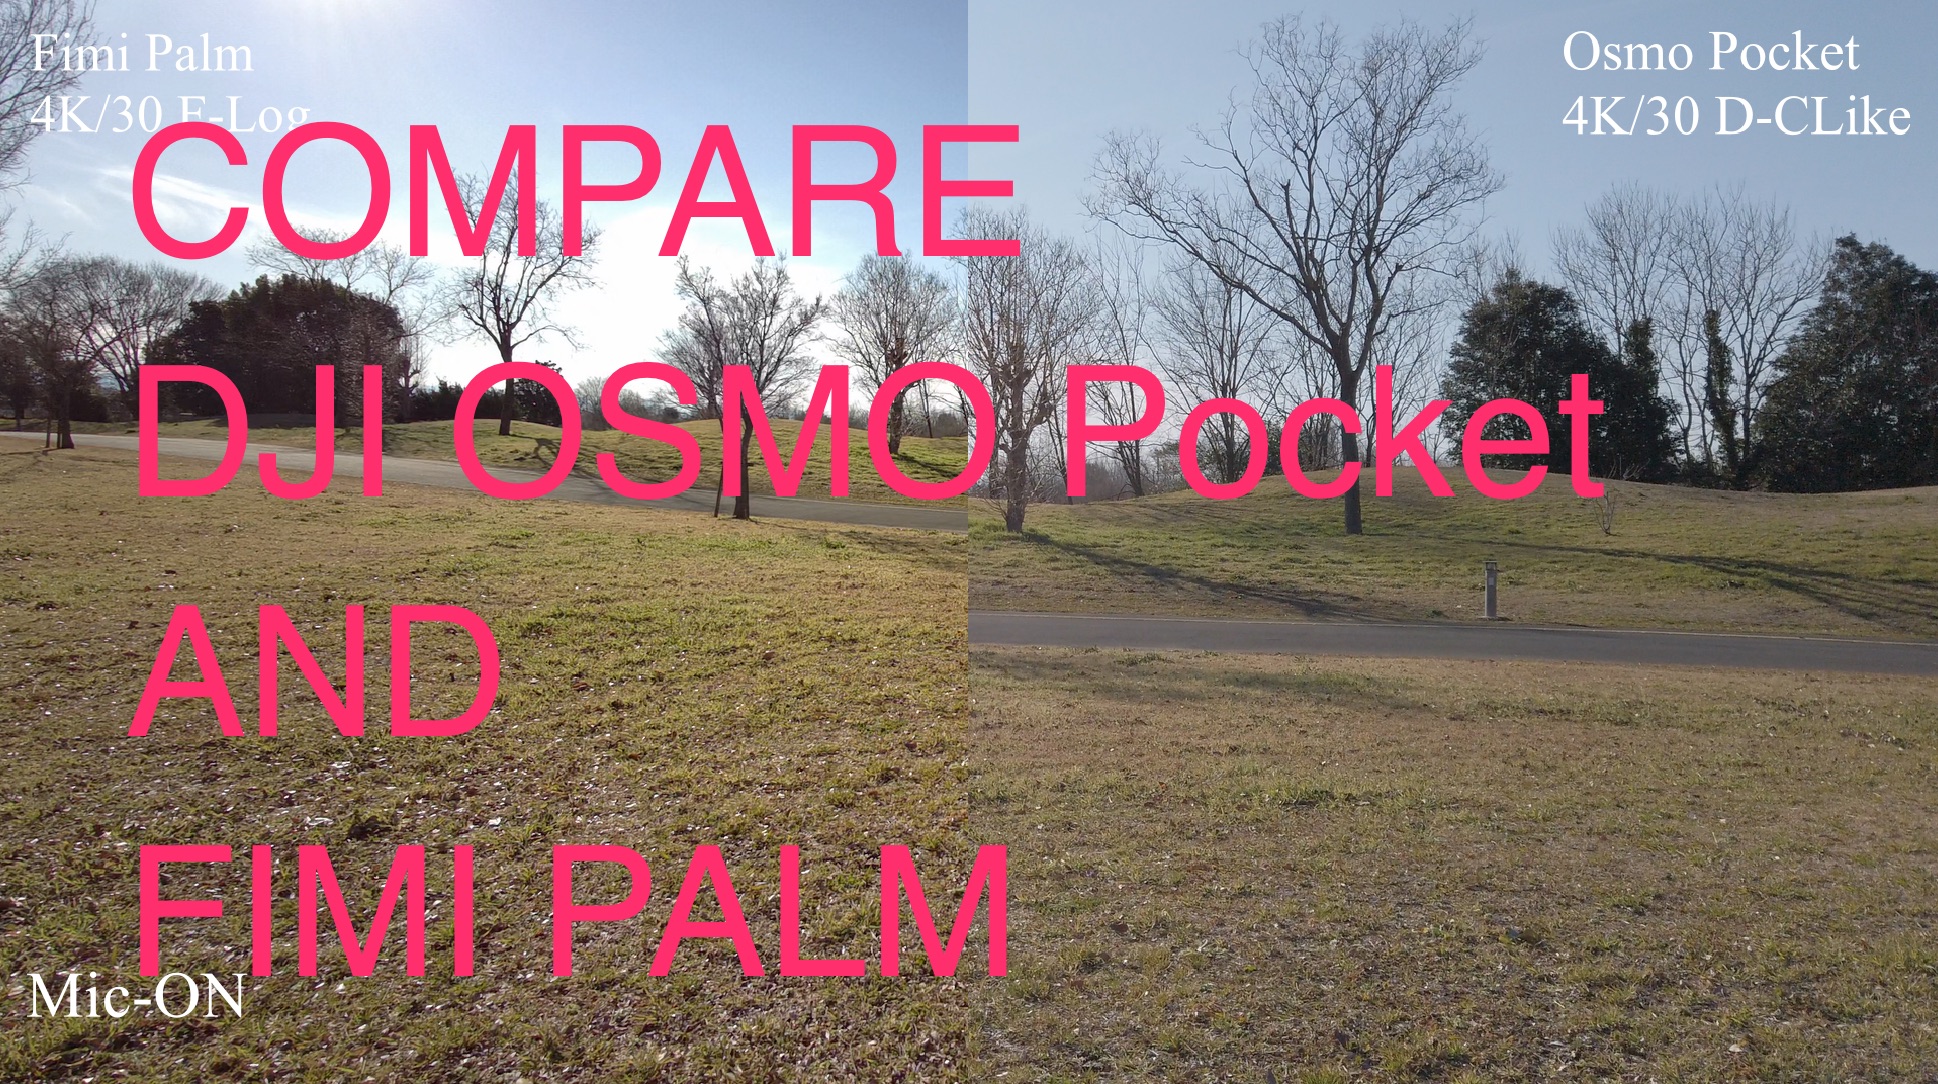 FIMI Palm AND Osmo Pocket